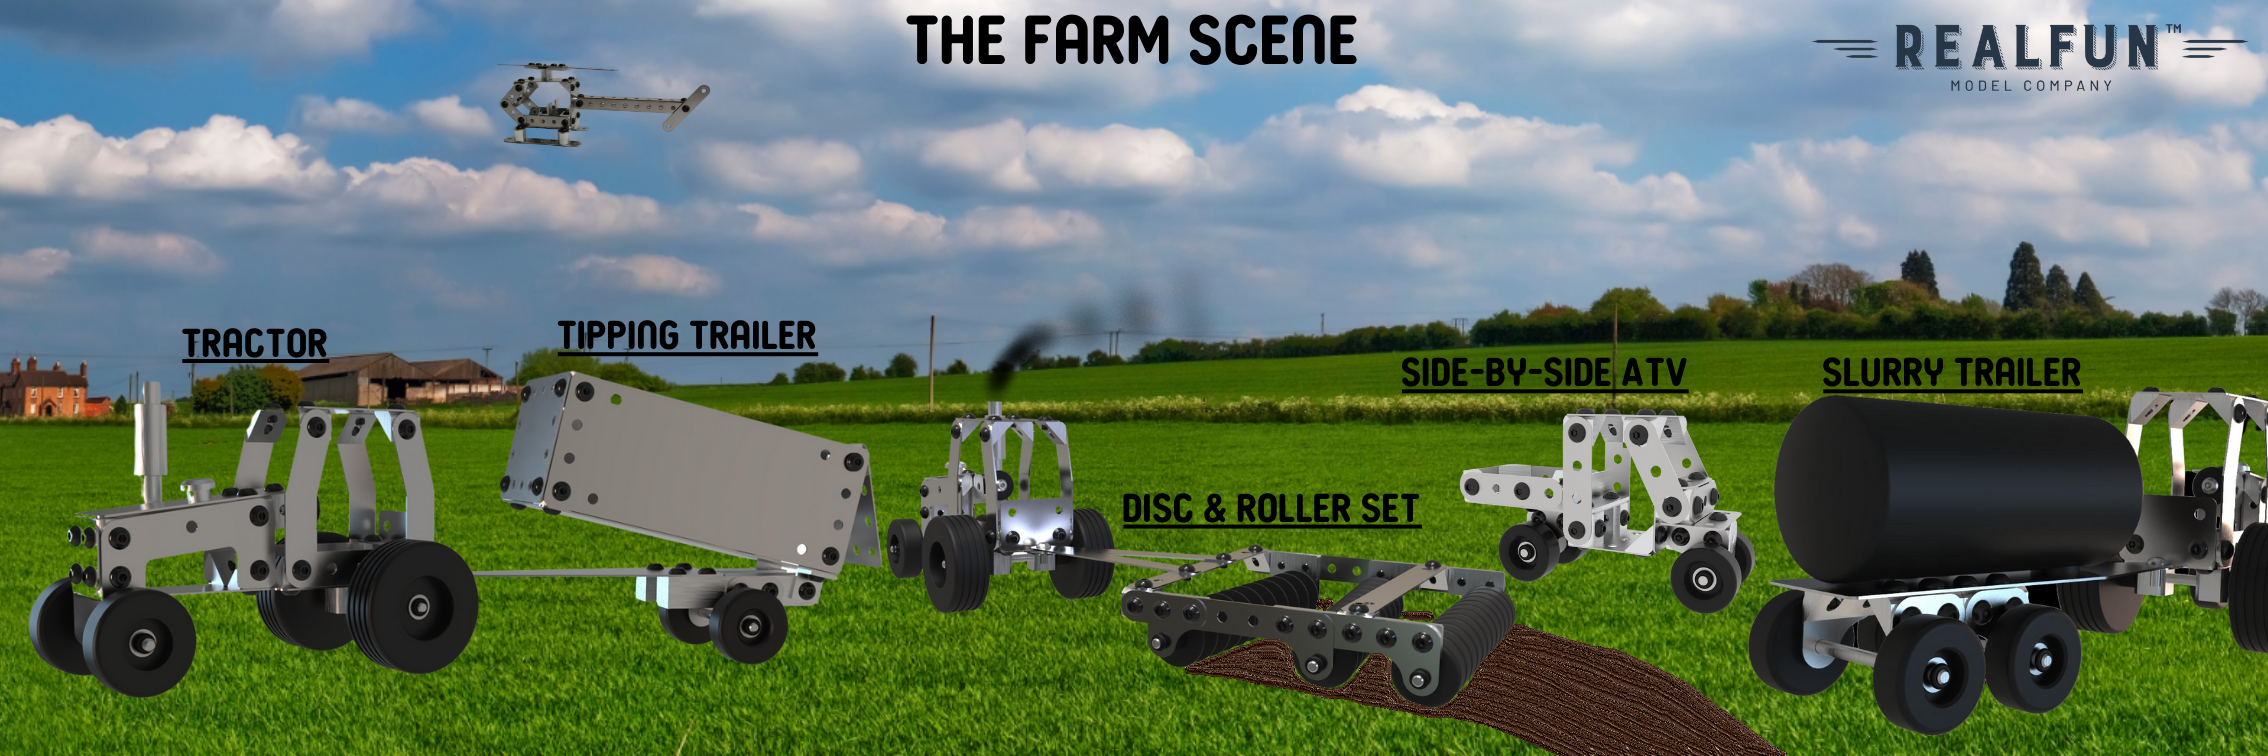 The Farm Scene